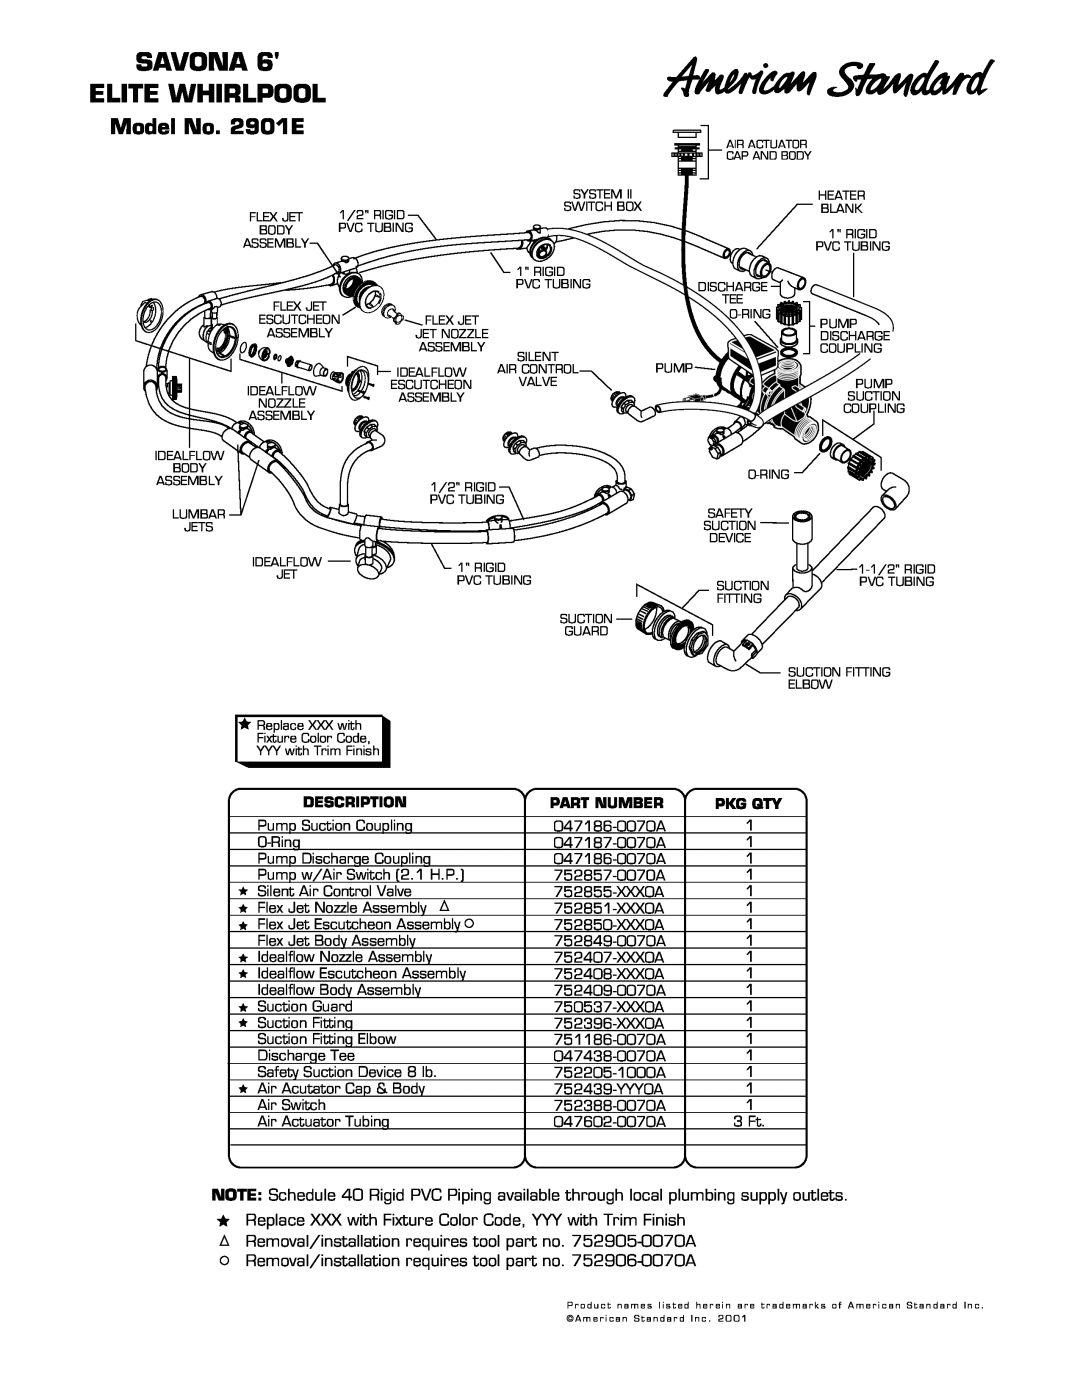 American Standard manual Savona Elite Whirlpool, Model No. 2901E, Description, Part Number, Pkg Qty 